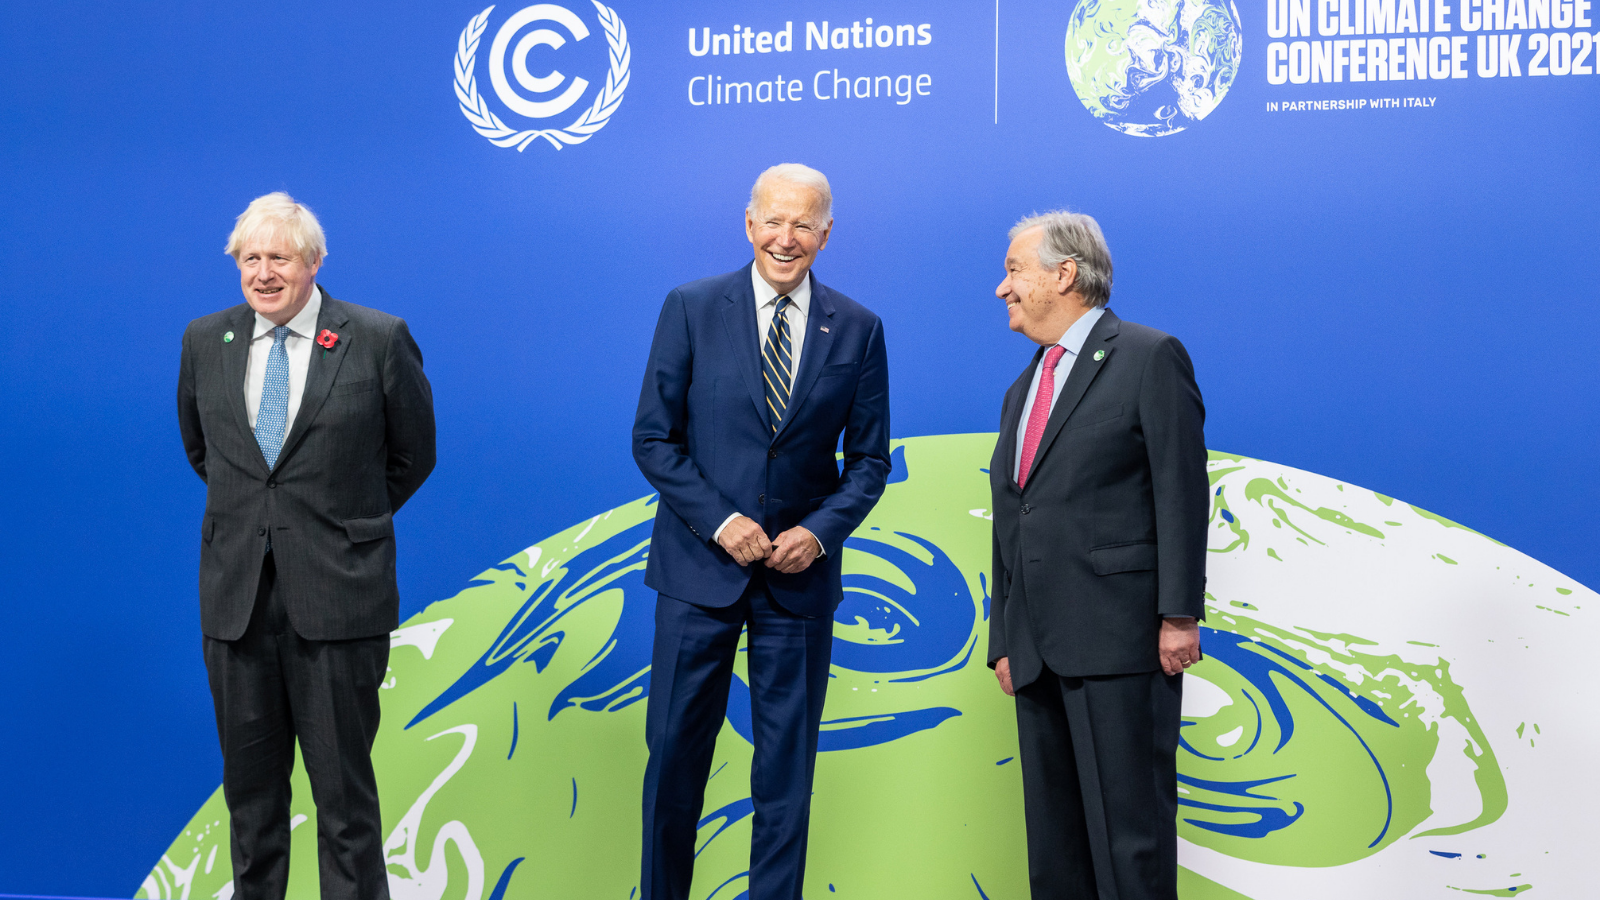 British Prime Minister Boris Johnson (left), President Joe Biden (middle), UN Secretary-General António Guterres (right) at the COP26 UN Climate Change Conference in Glasgow, Scotland, November 1, 2021. [White House photo/Public Domain]